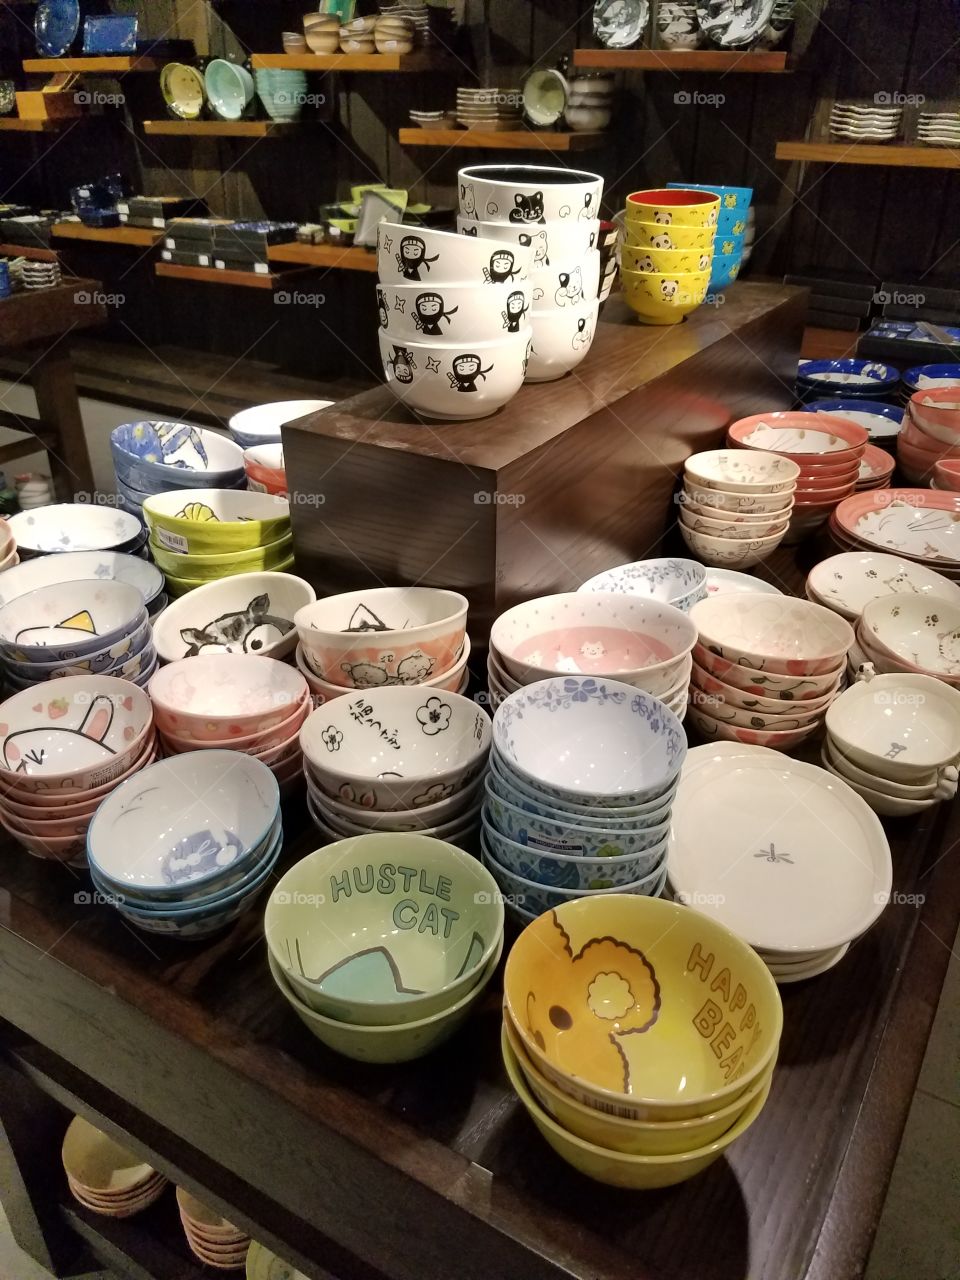 Japanese bowls